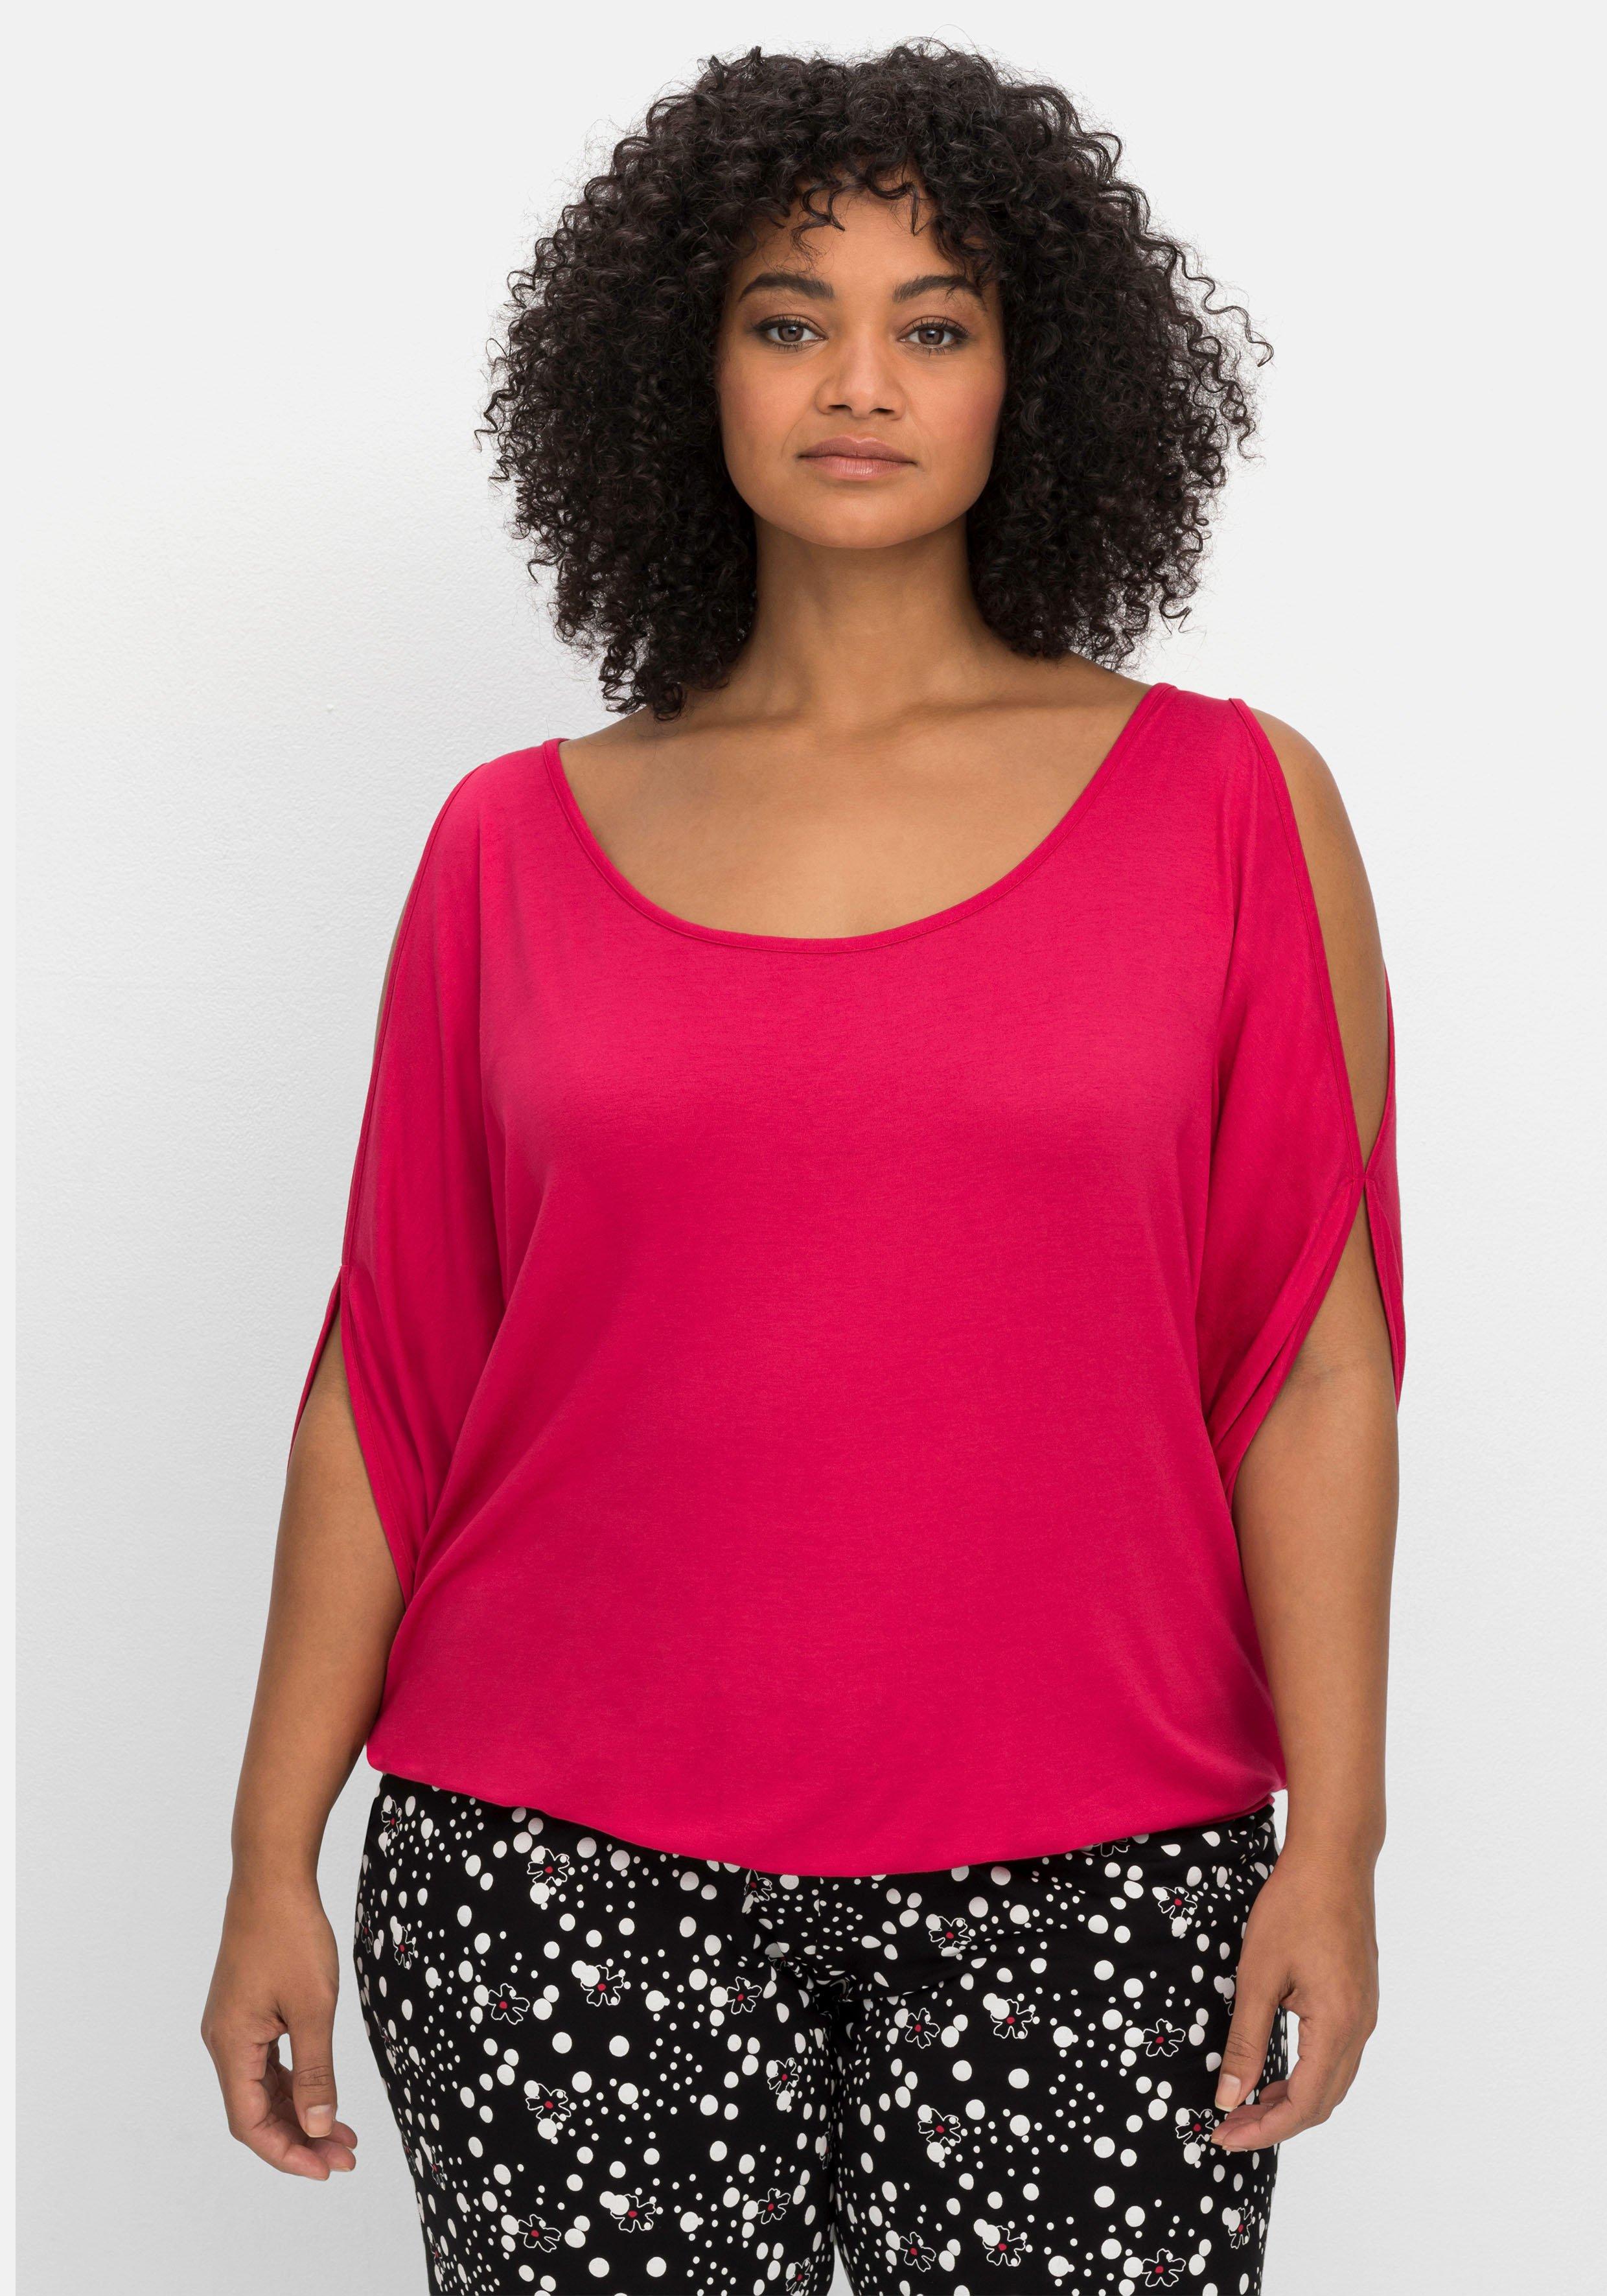 Größe & | › Größen rosa Tops Size Plus ♥ große Shirts 44 sheego Mode